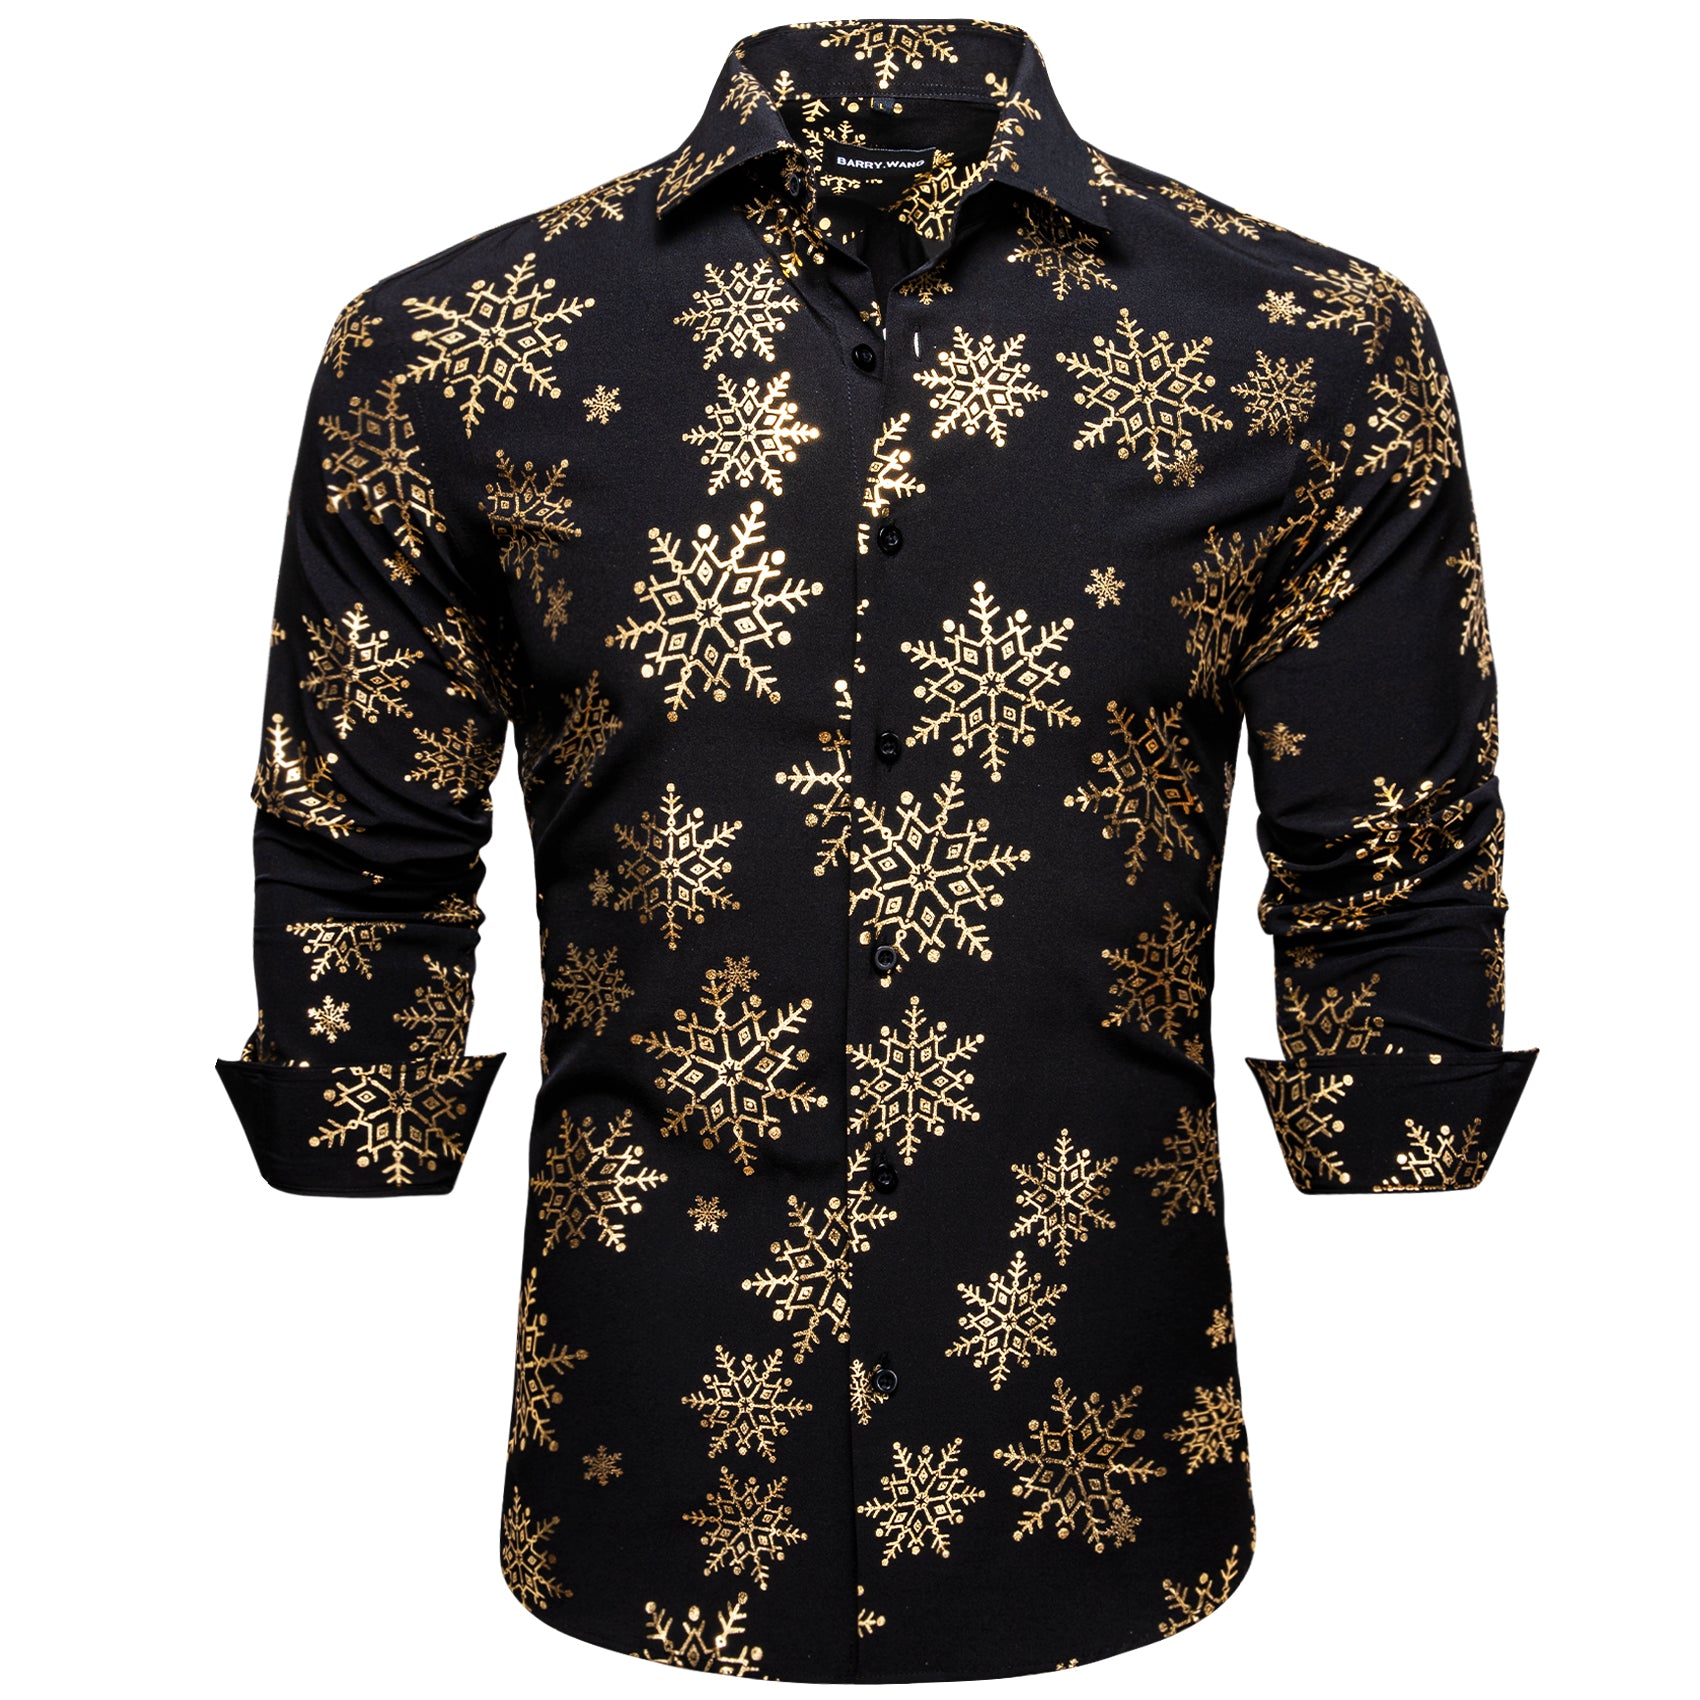 Barry.wang Button Down Shirt Christmas Black Gold Snowflake Floral Silk Shirt